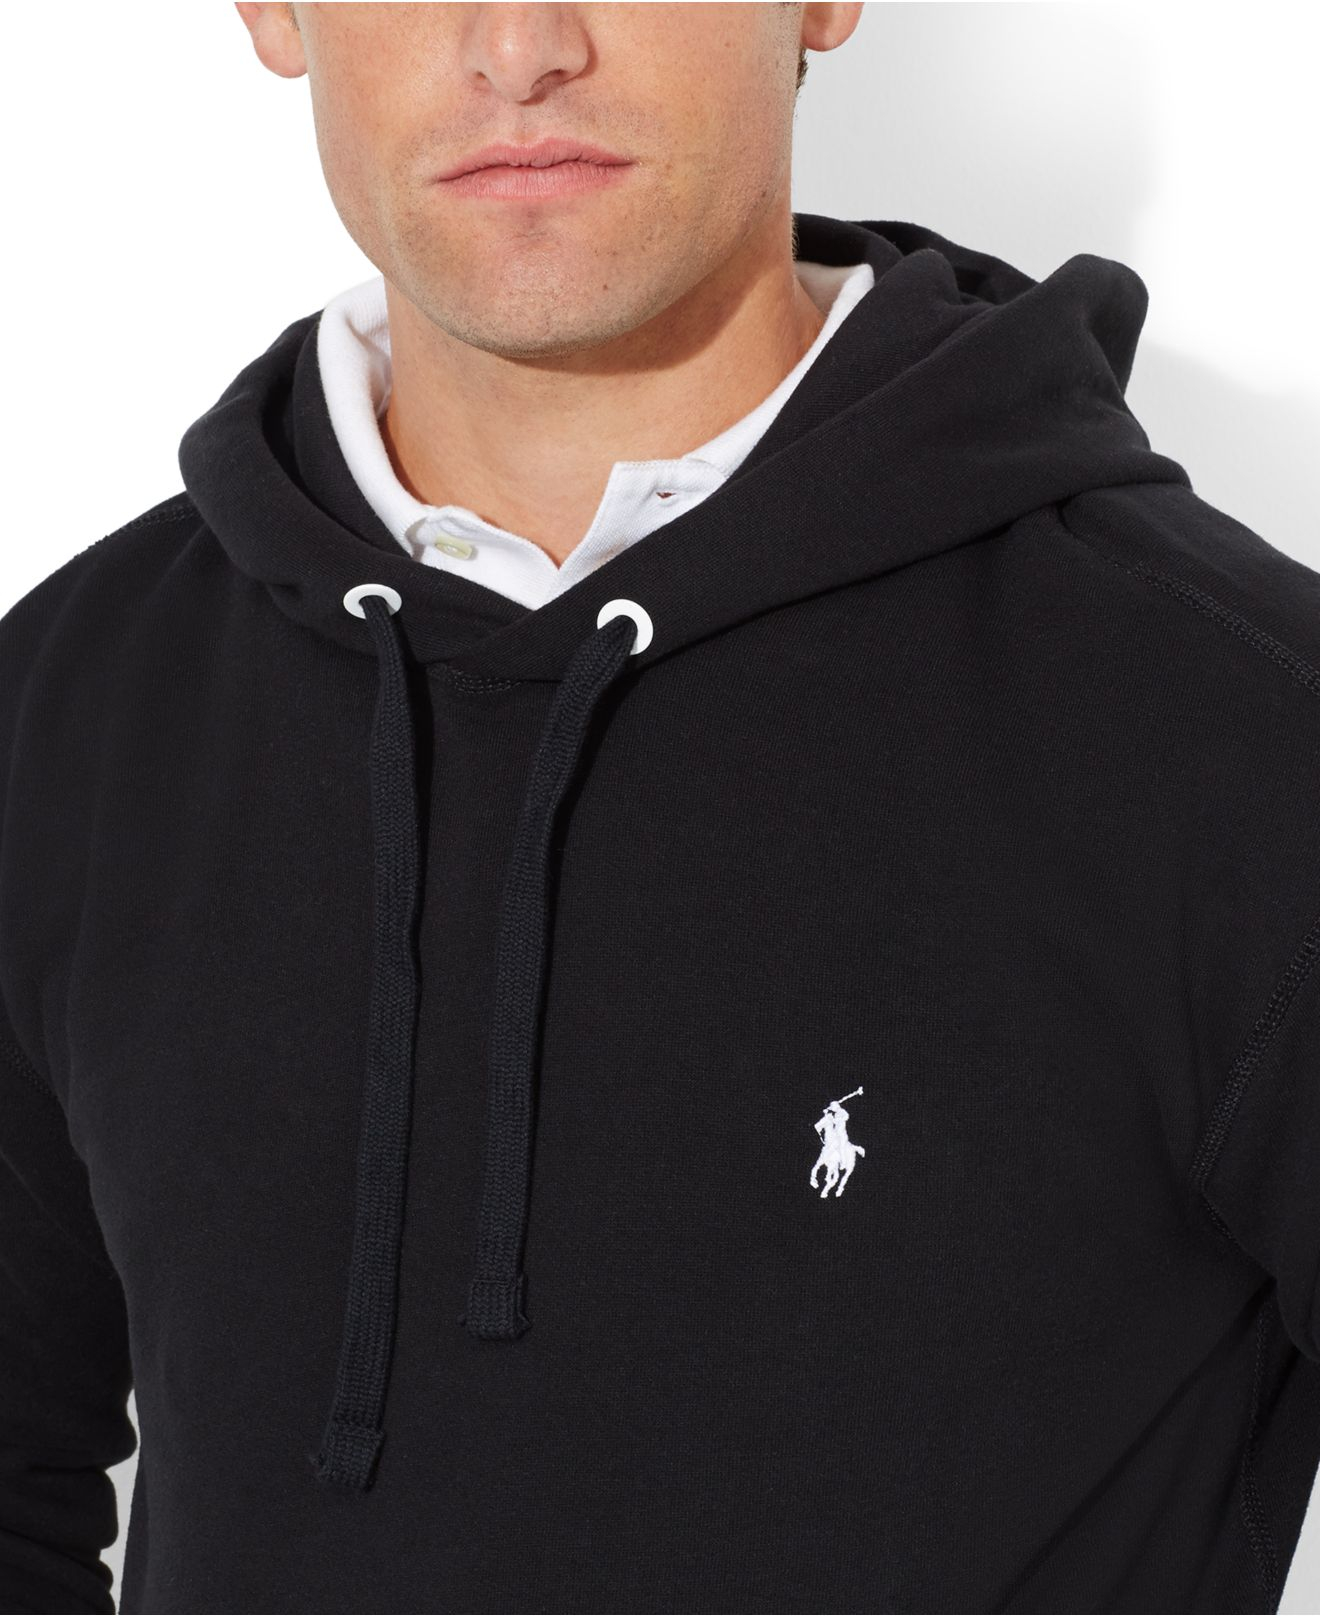 polo hoodie mens black - 58% OFF 